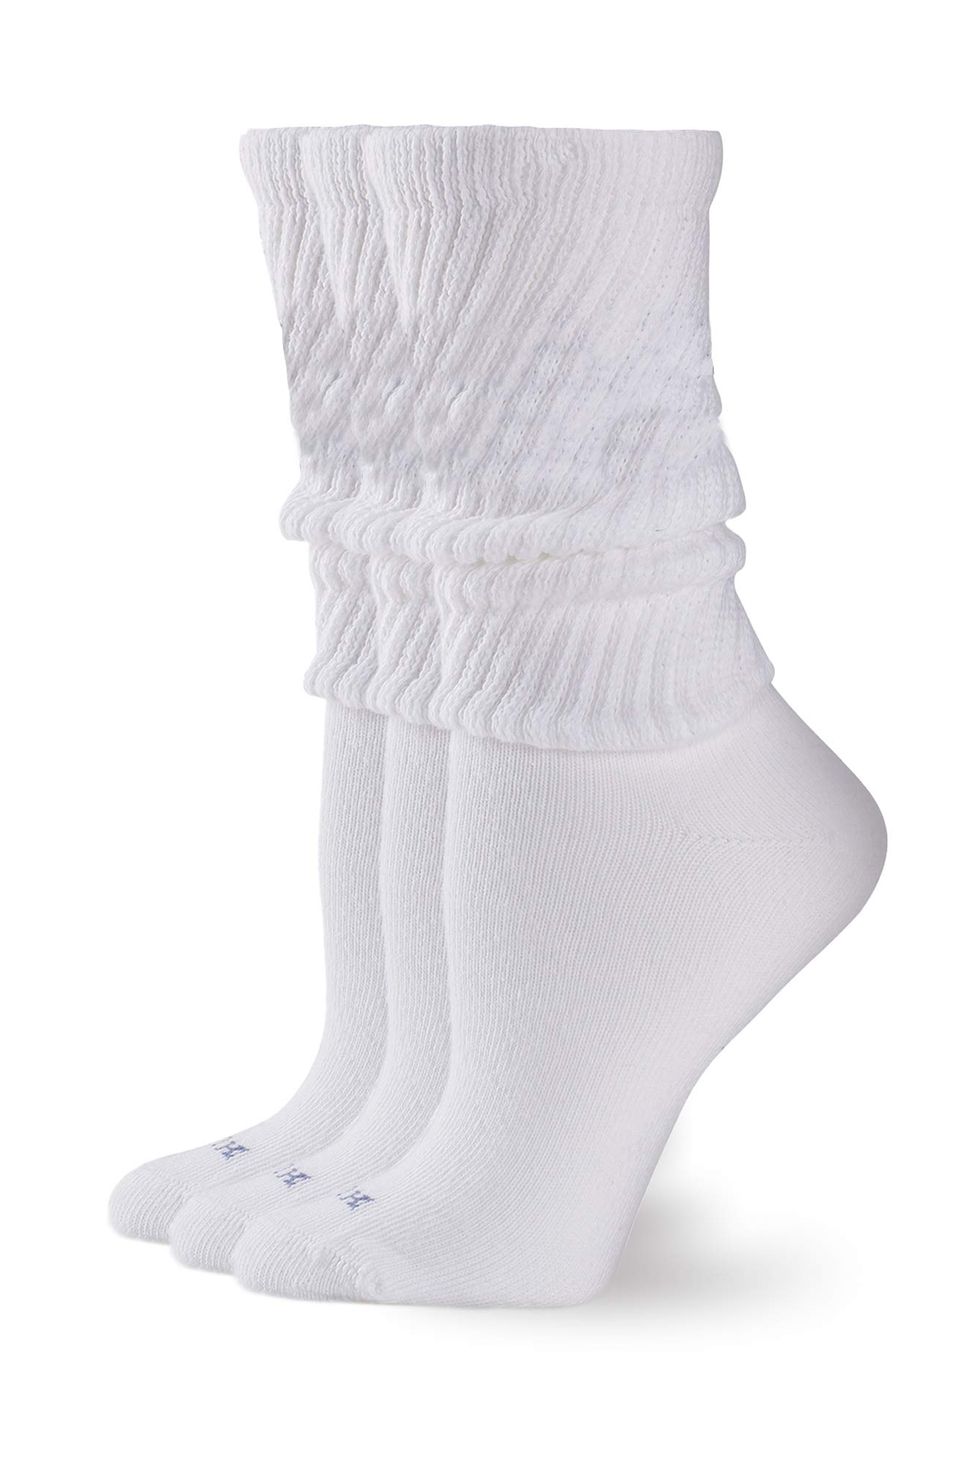 LV socks  Designer socks, Socks, Pretty outfits